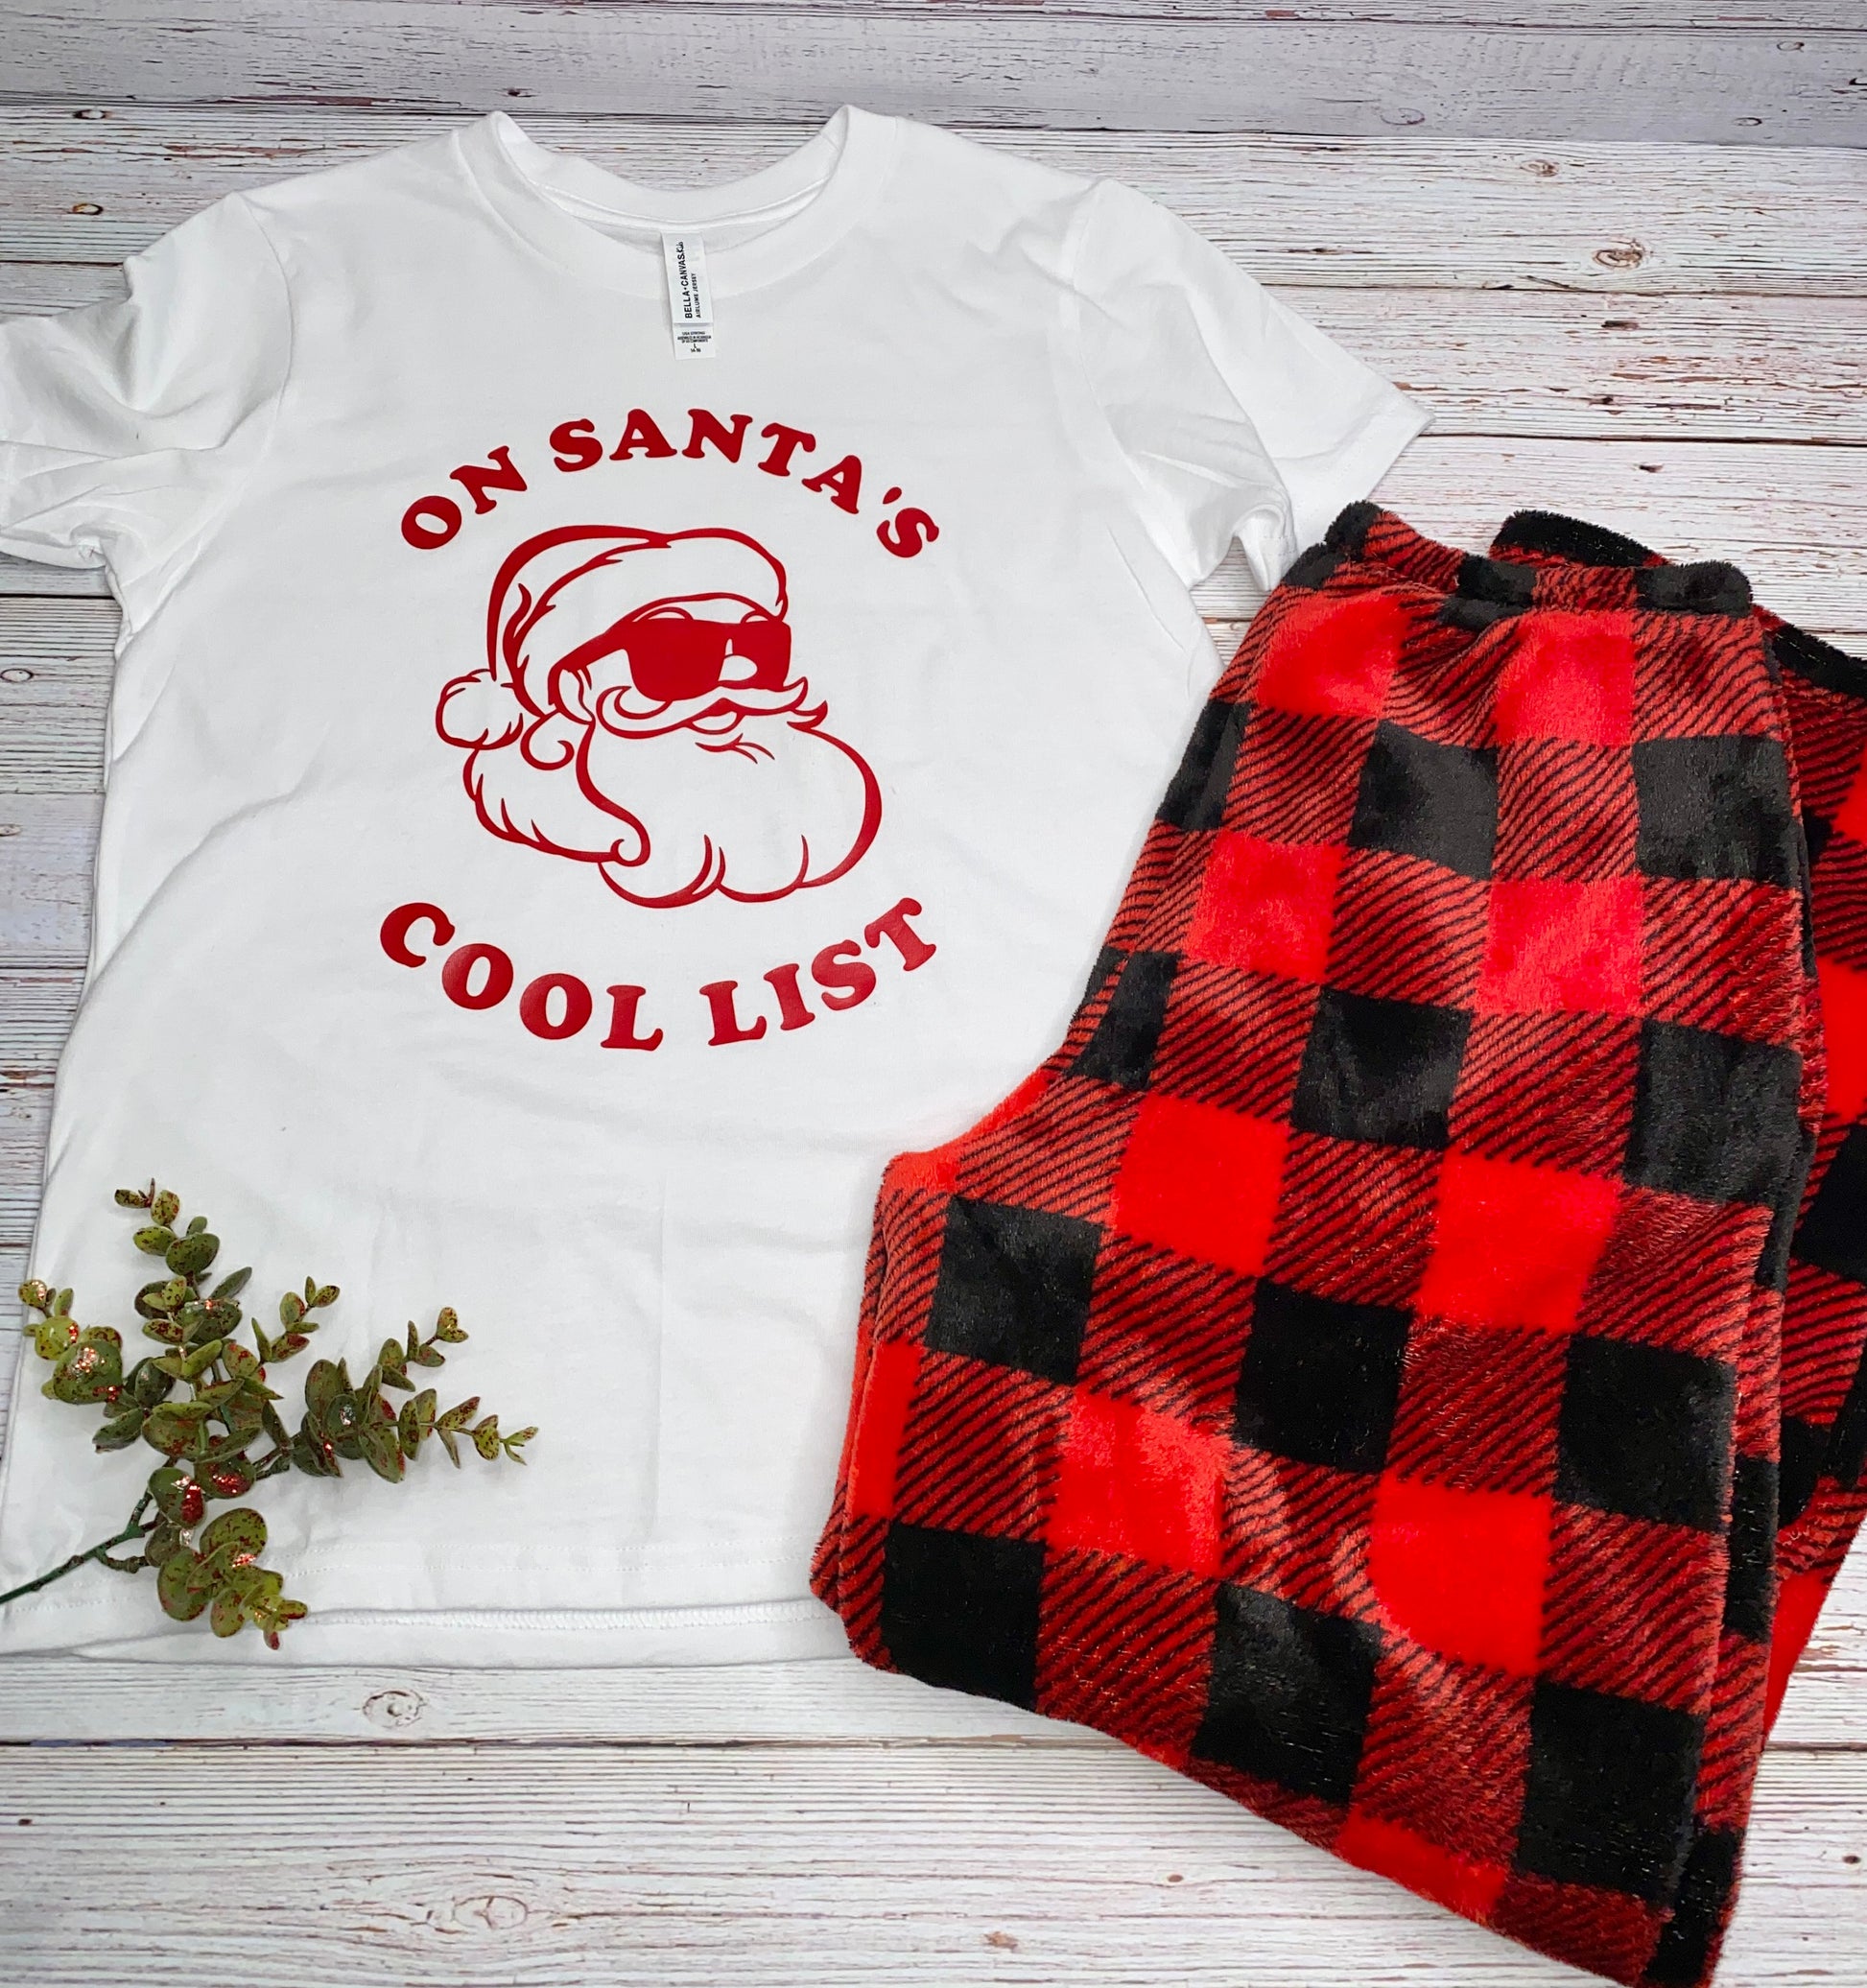 On Santa's Cool List Graphic Shirt, Sunglasses Santa T-Shirt, Christmas PJ Top, Funny Santa Tee, Boy's Christmas Shirt, Toddler Girls Tween